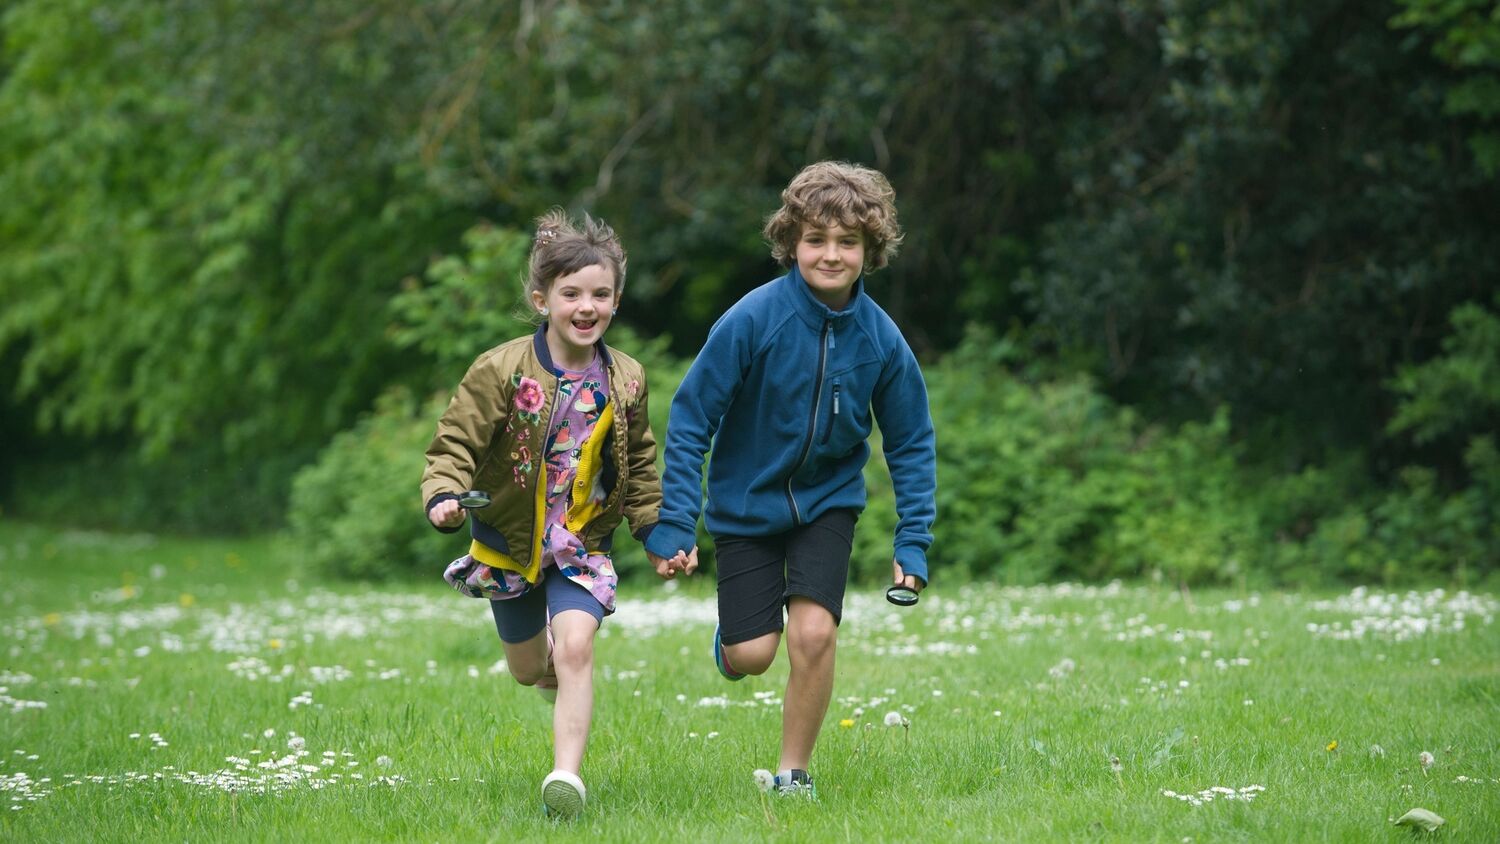 Two young boys run across a lawn towards the camera.